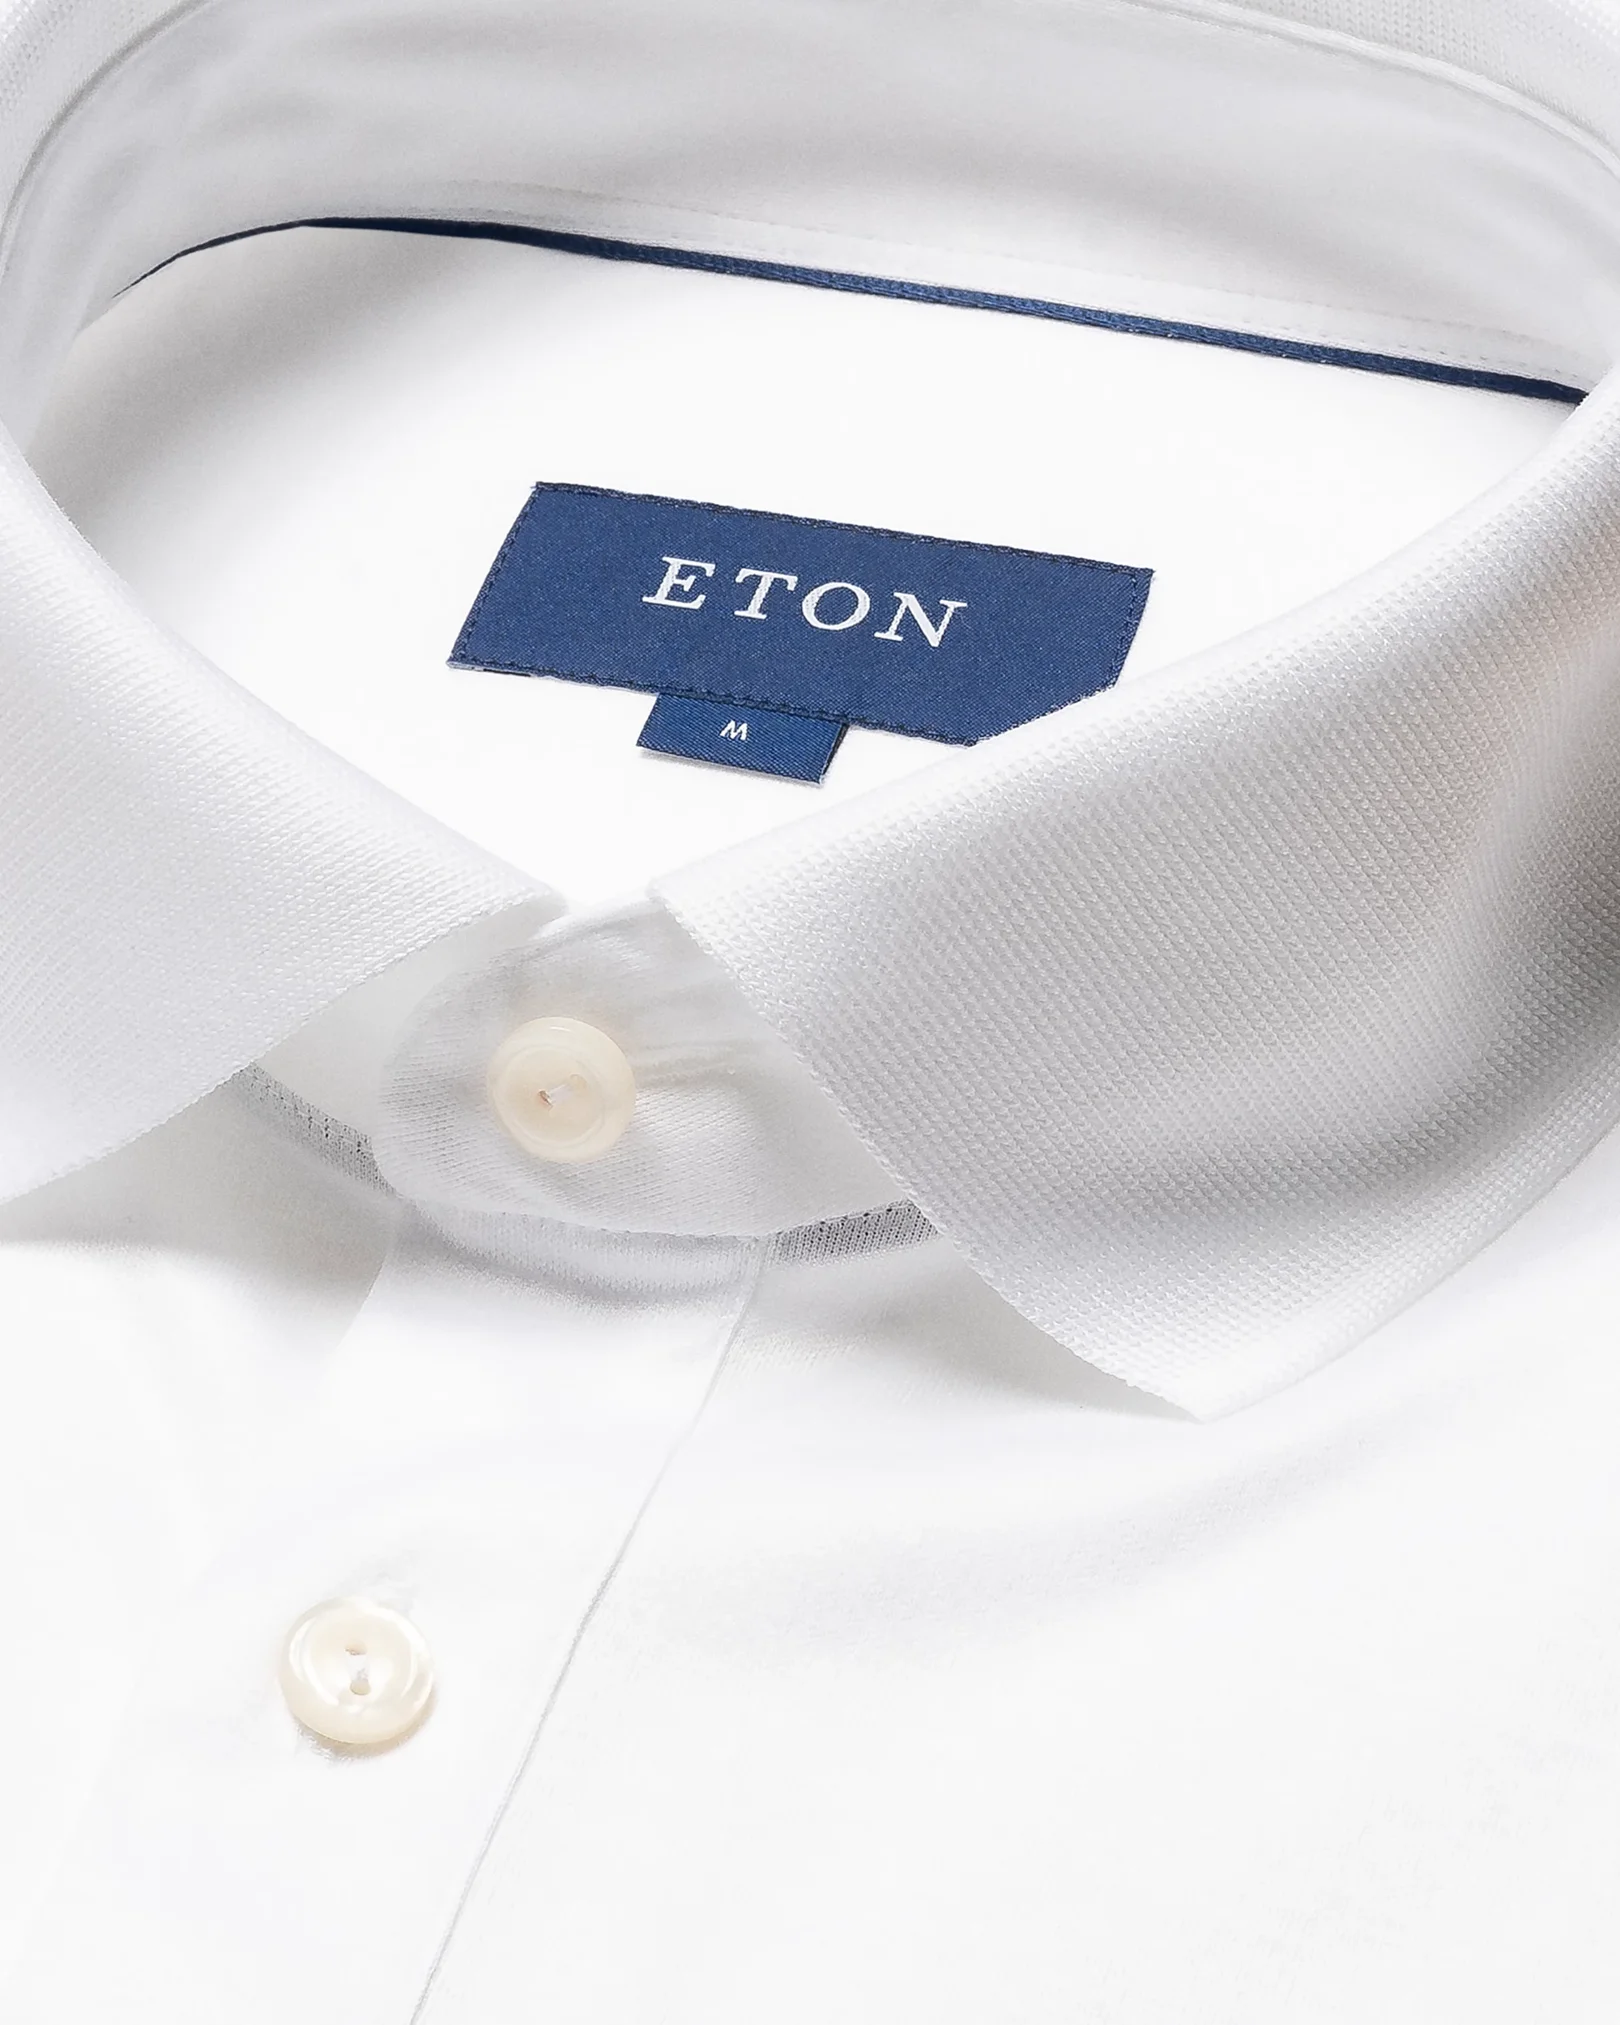 Eton - white jersey short sleeve